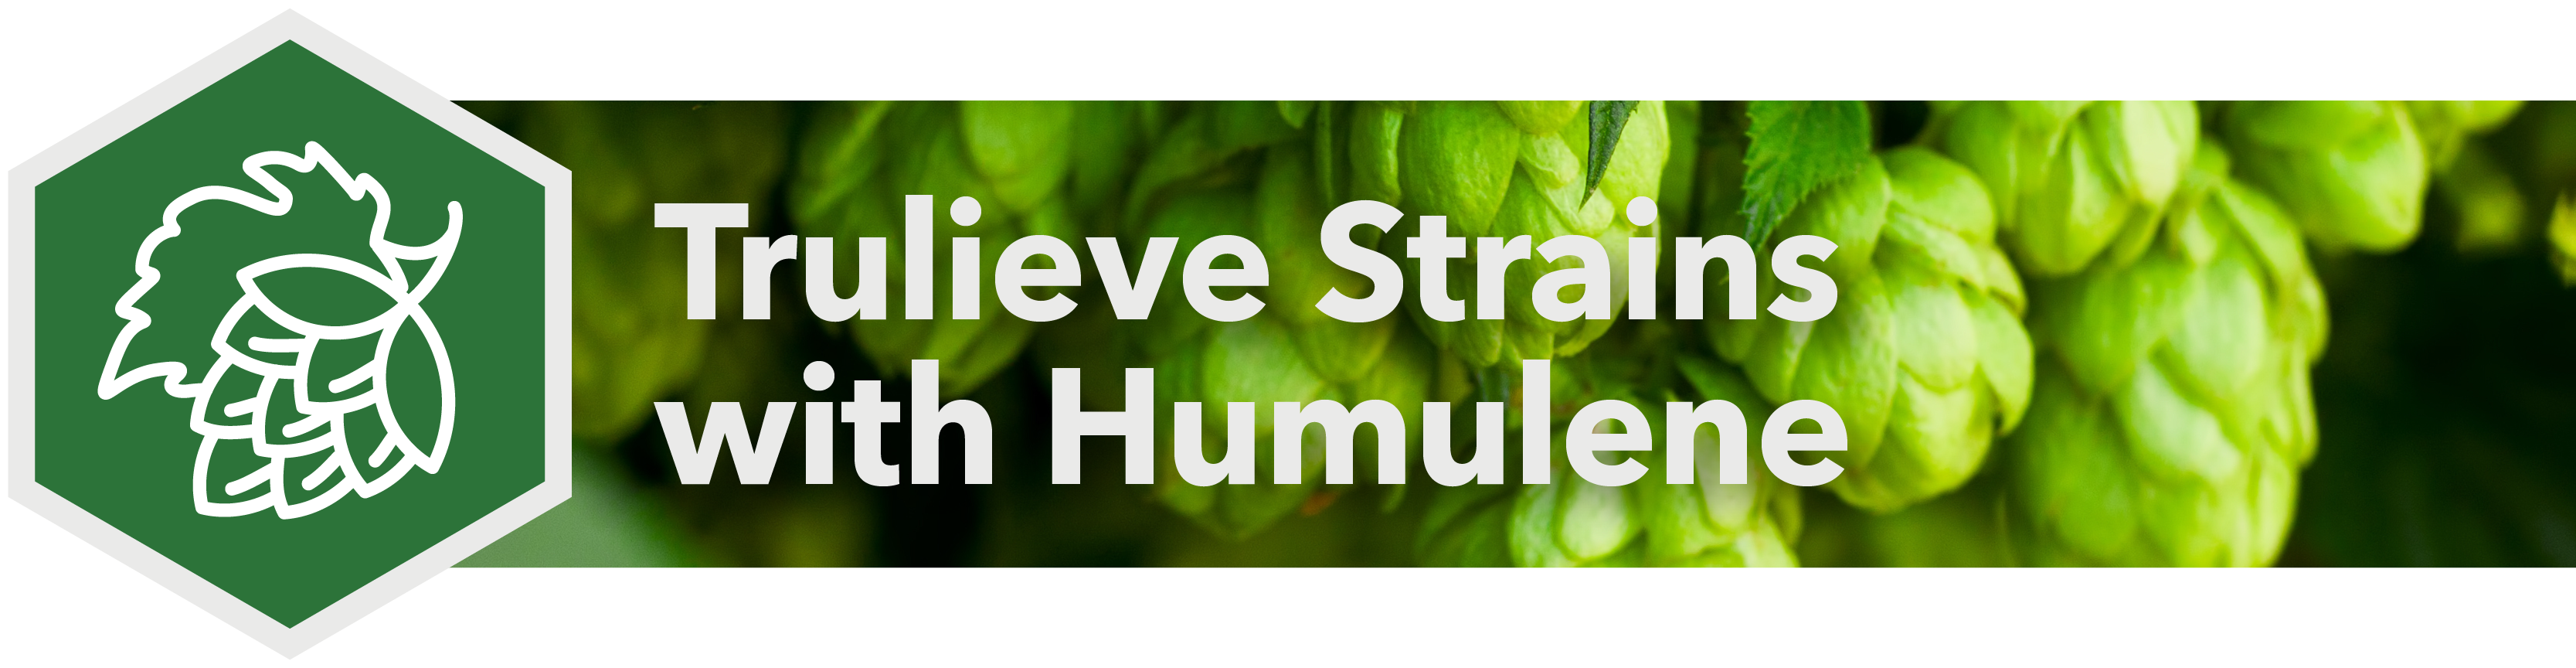 Trulieve Strains with Humulene